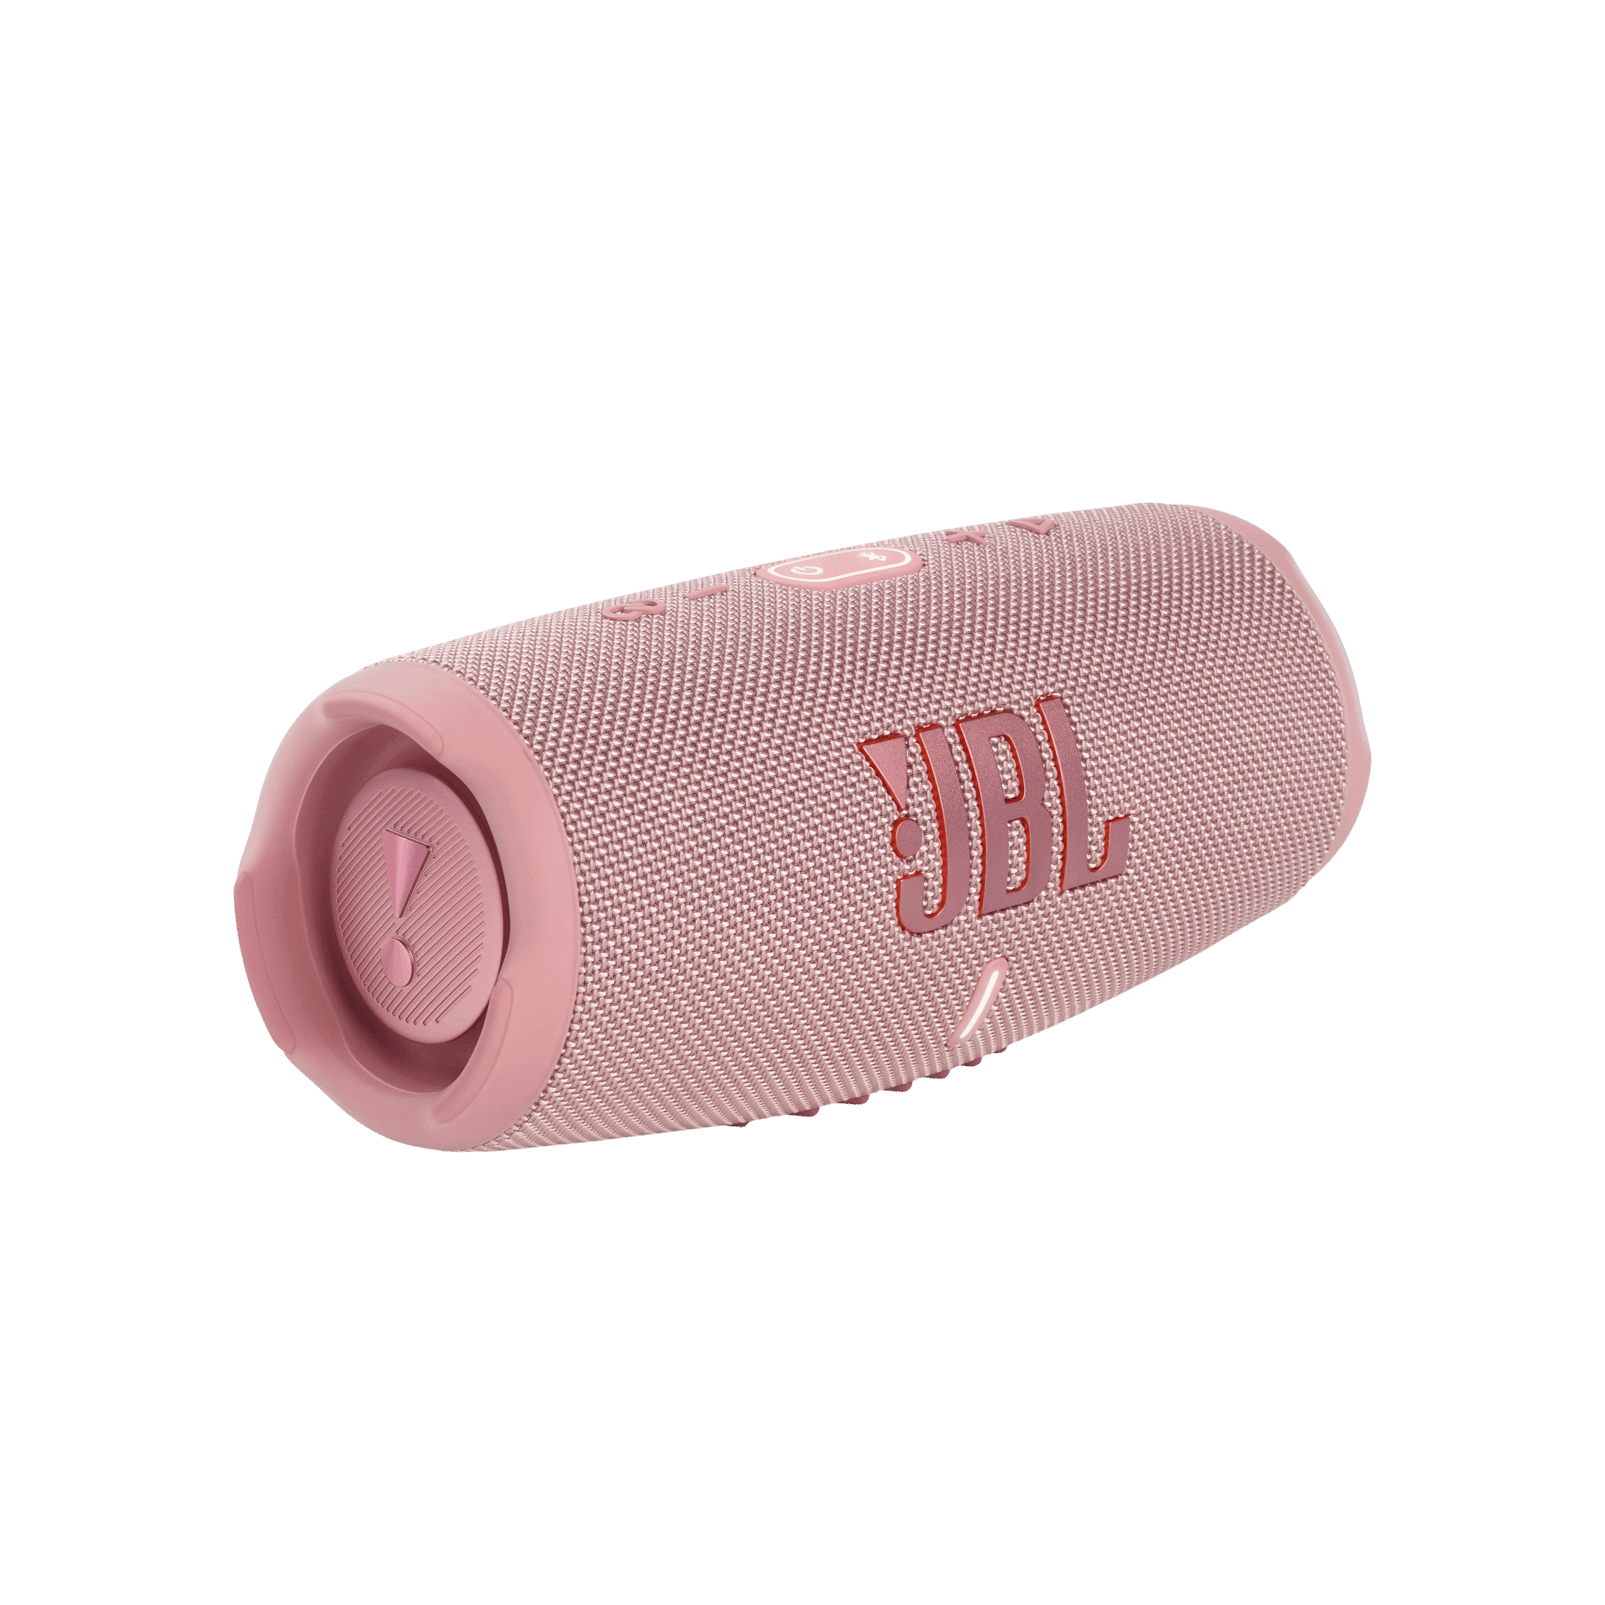 JBL CHARGE 5 Portable Bluetooth Speaker